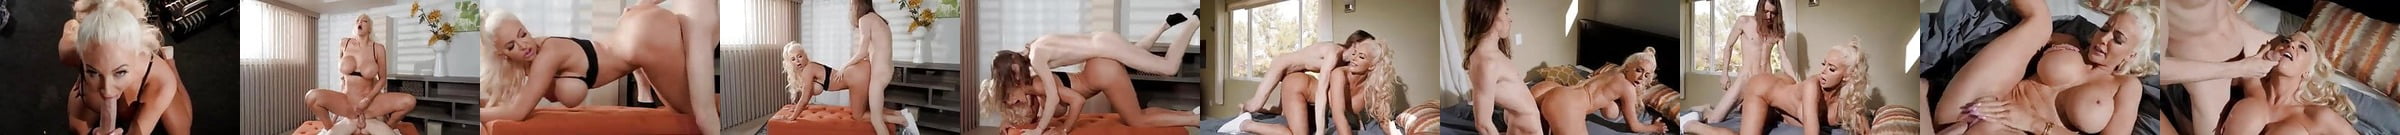 Nicolette Shea Free Porn Star Videos 179 Xhamster